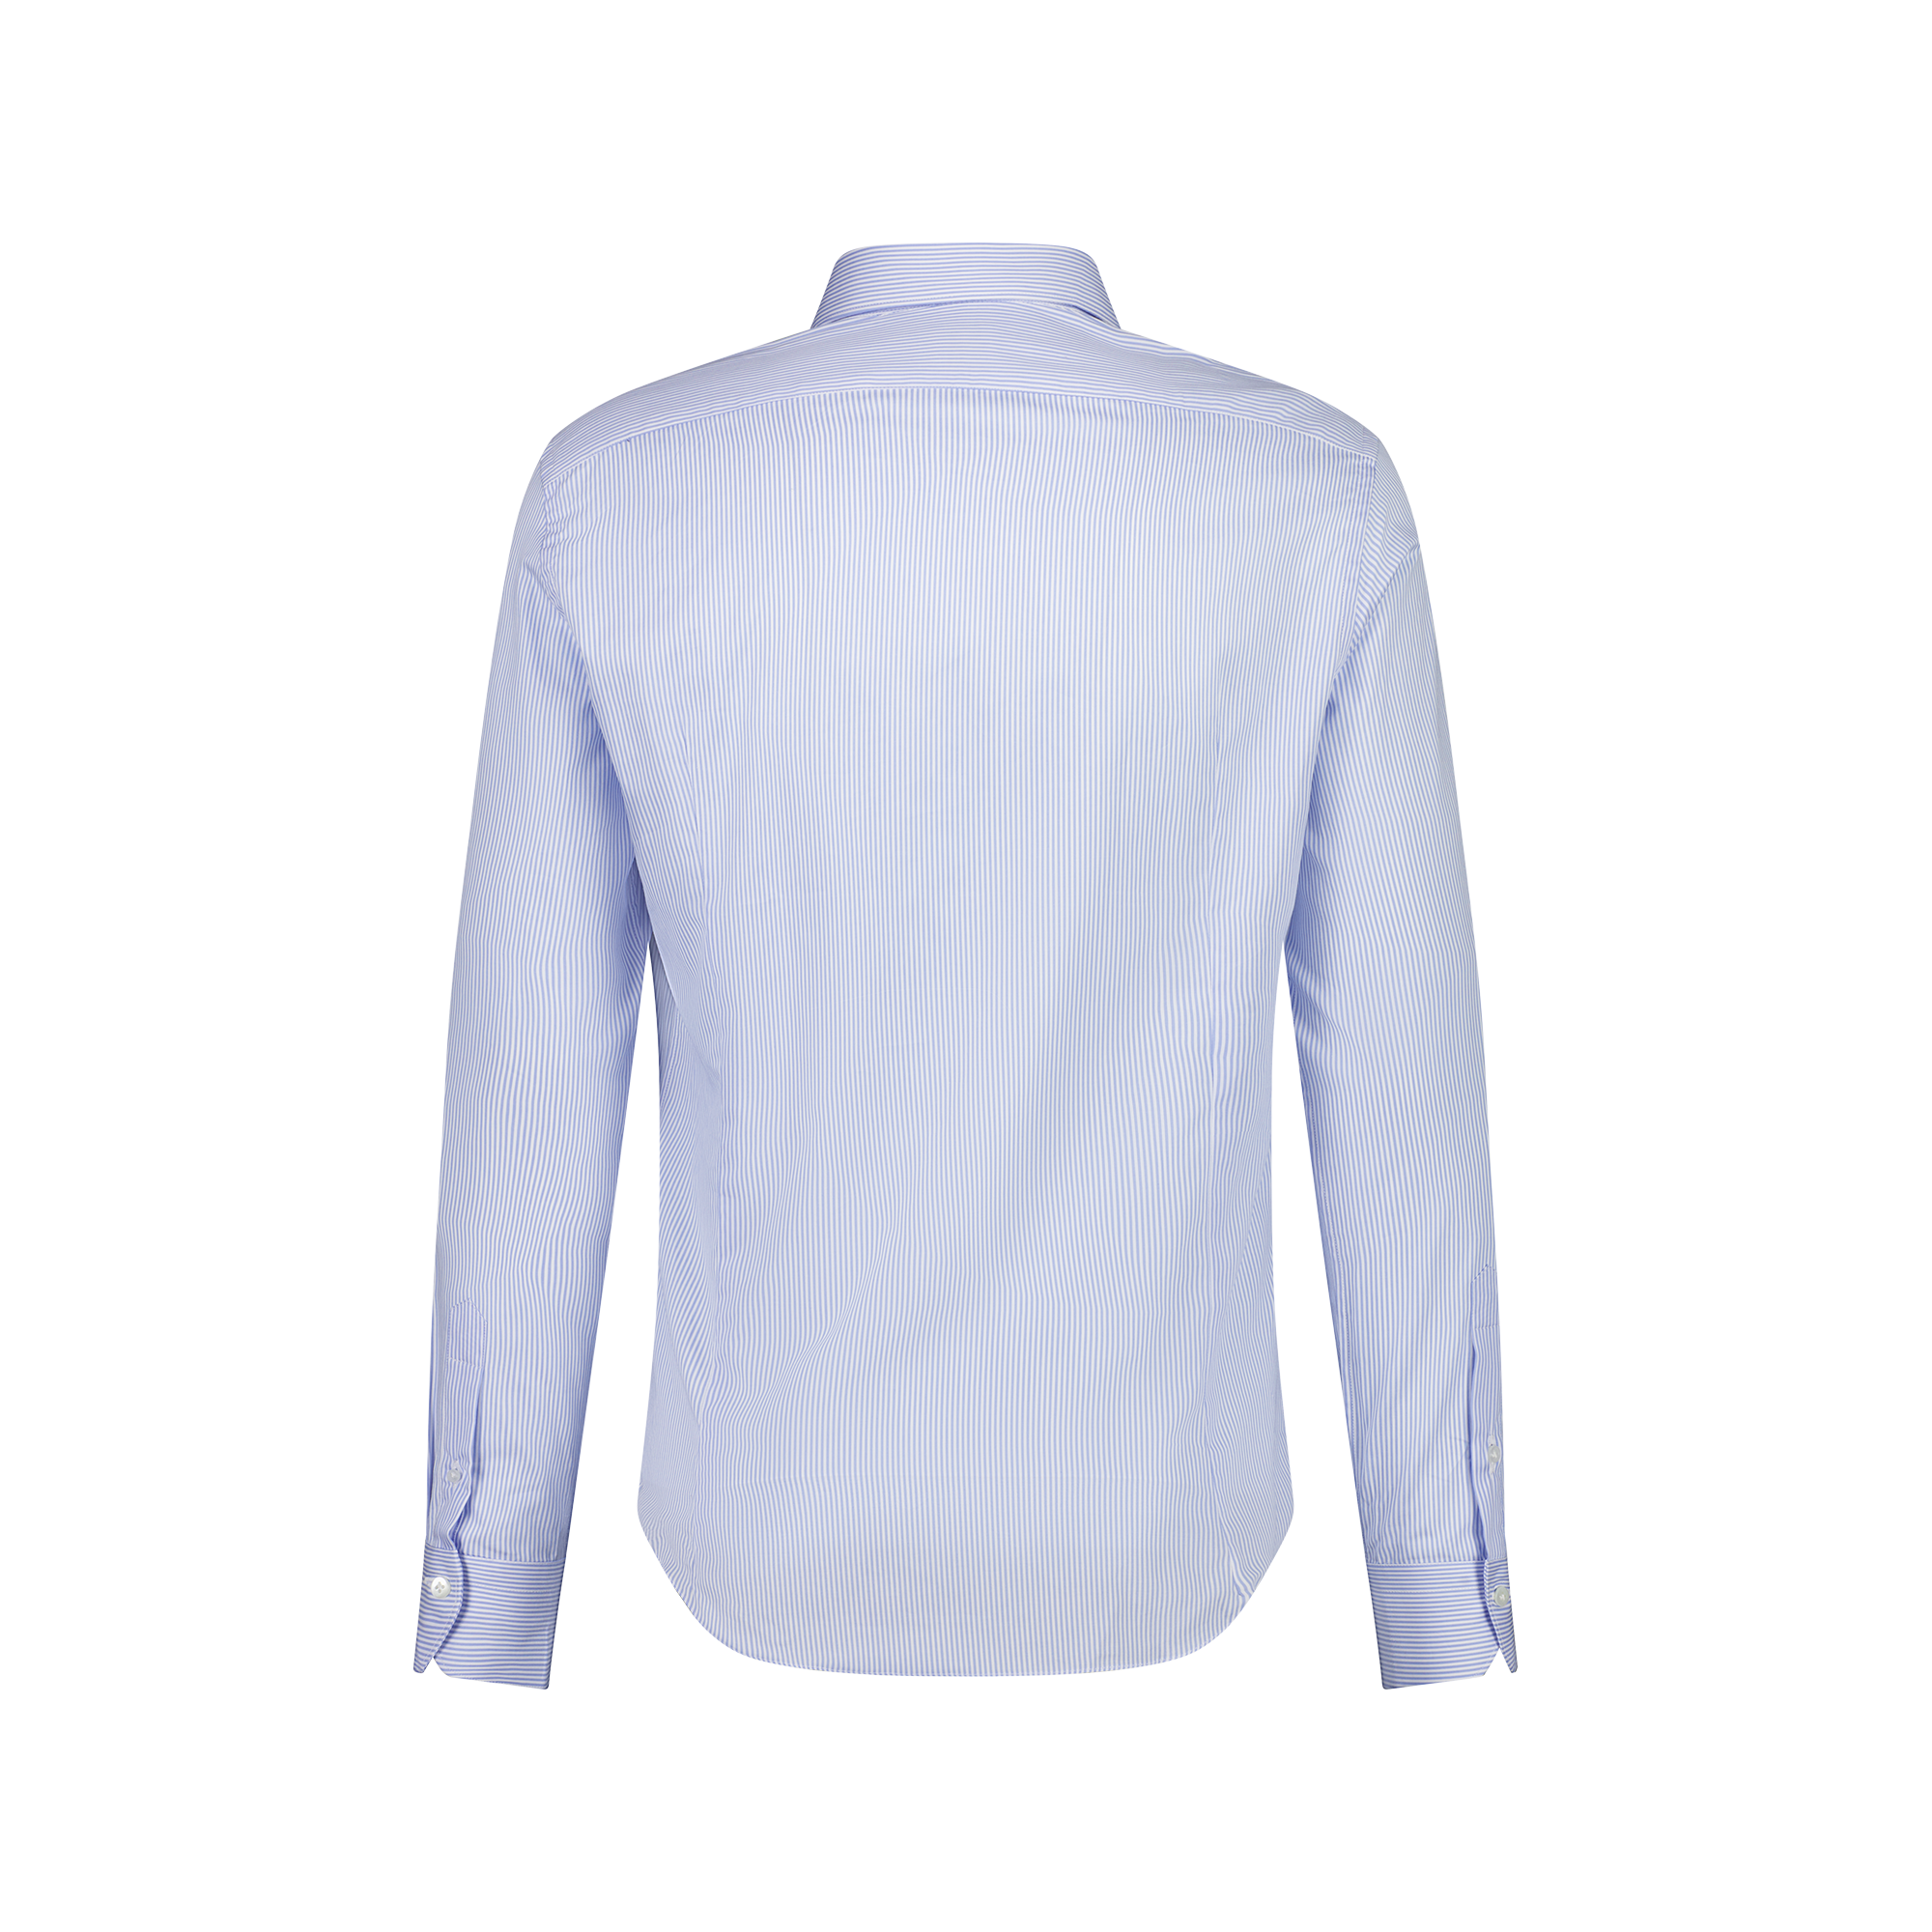 Cordone Elegance 313 Shirt in LIGHT BLUE